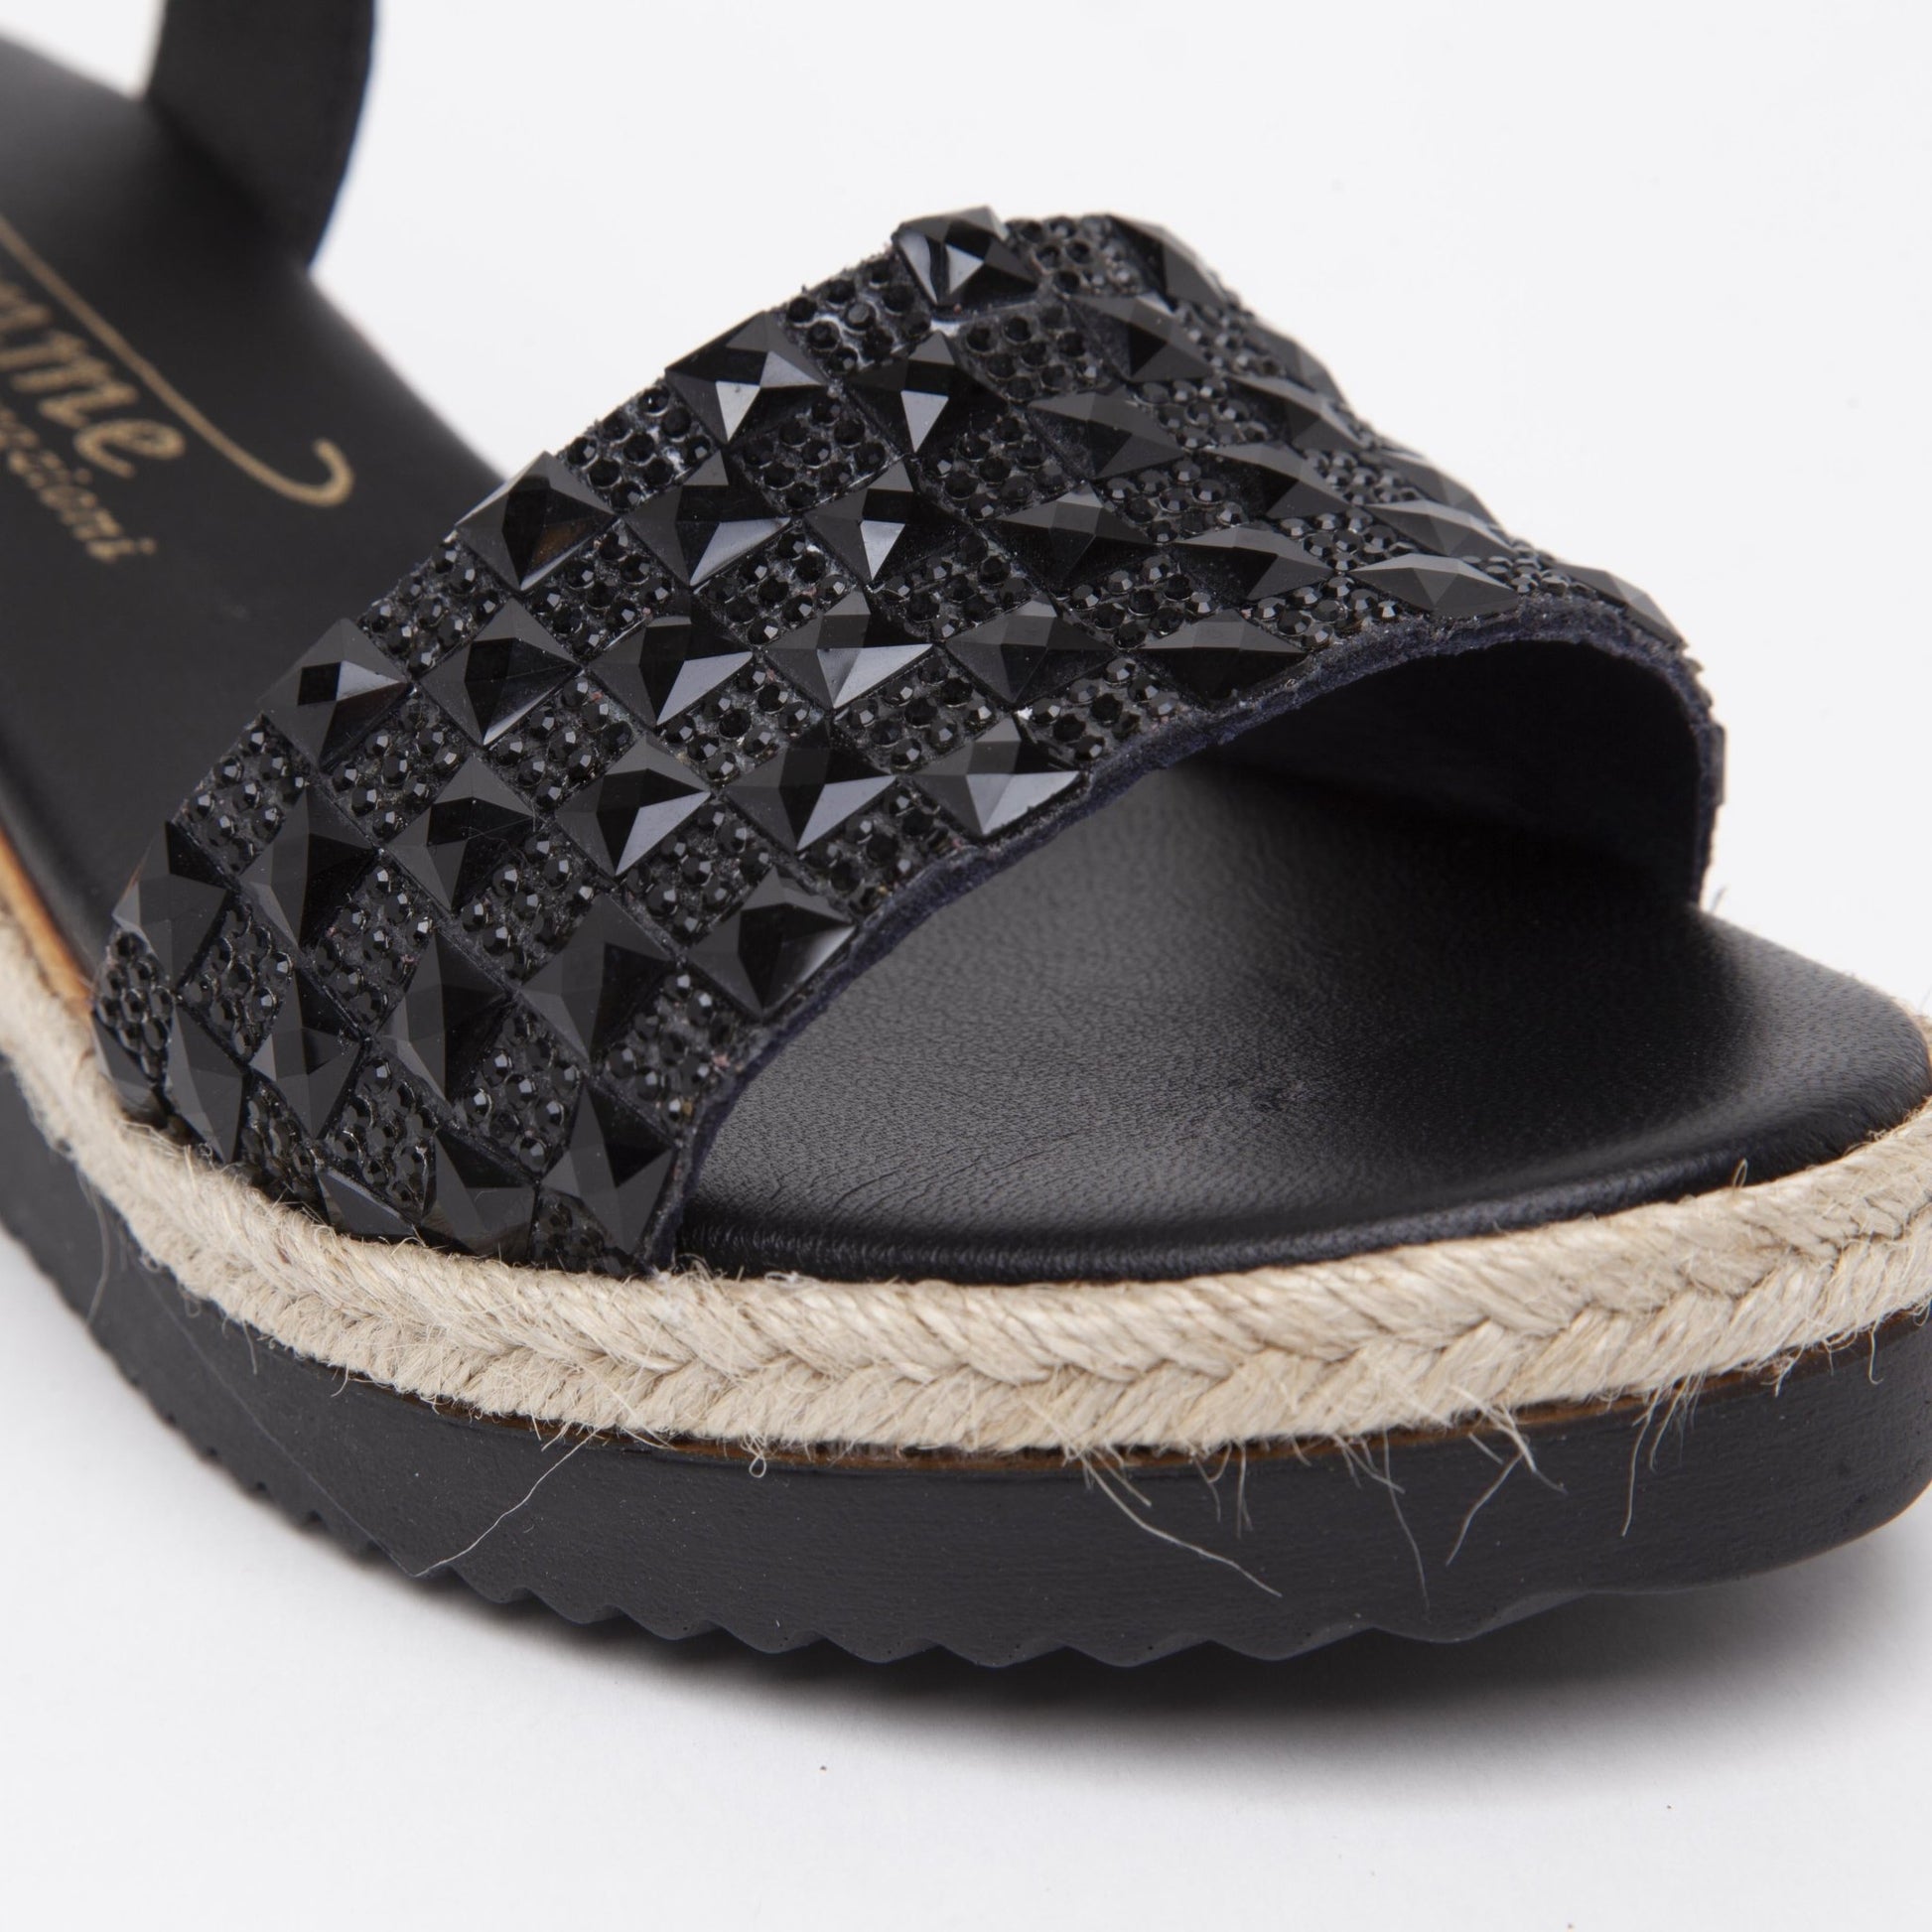 Sandalo zeppa in nappa nera con strass in tinta. - TreemmeCreazioni